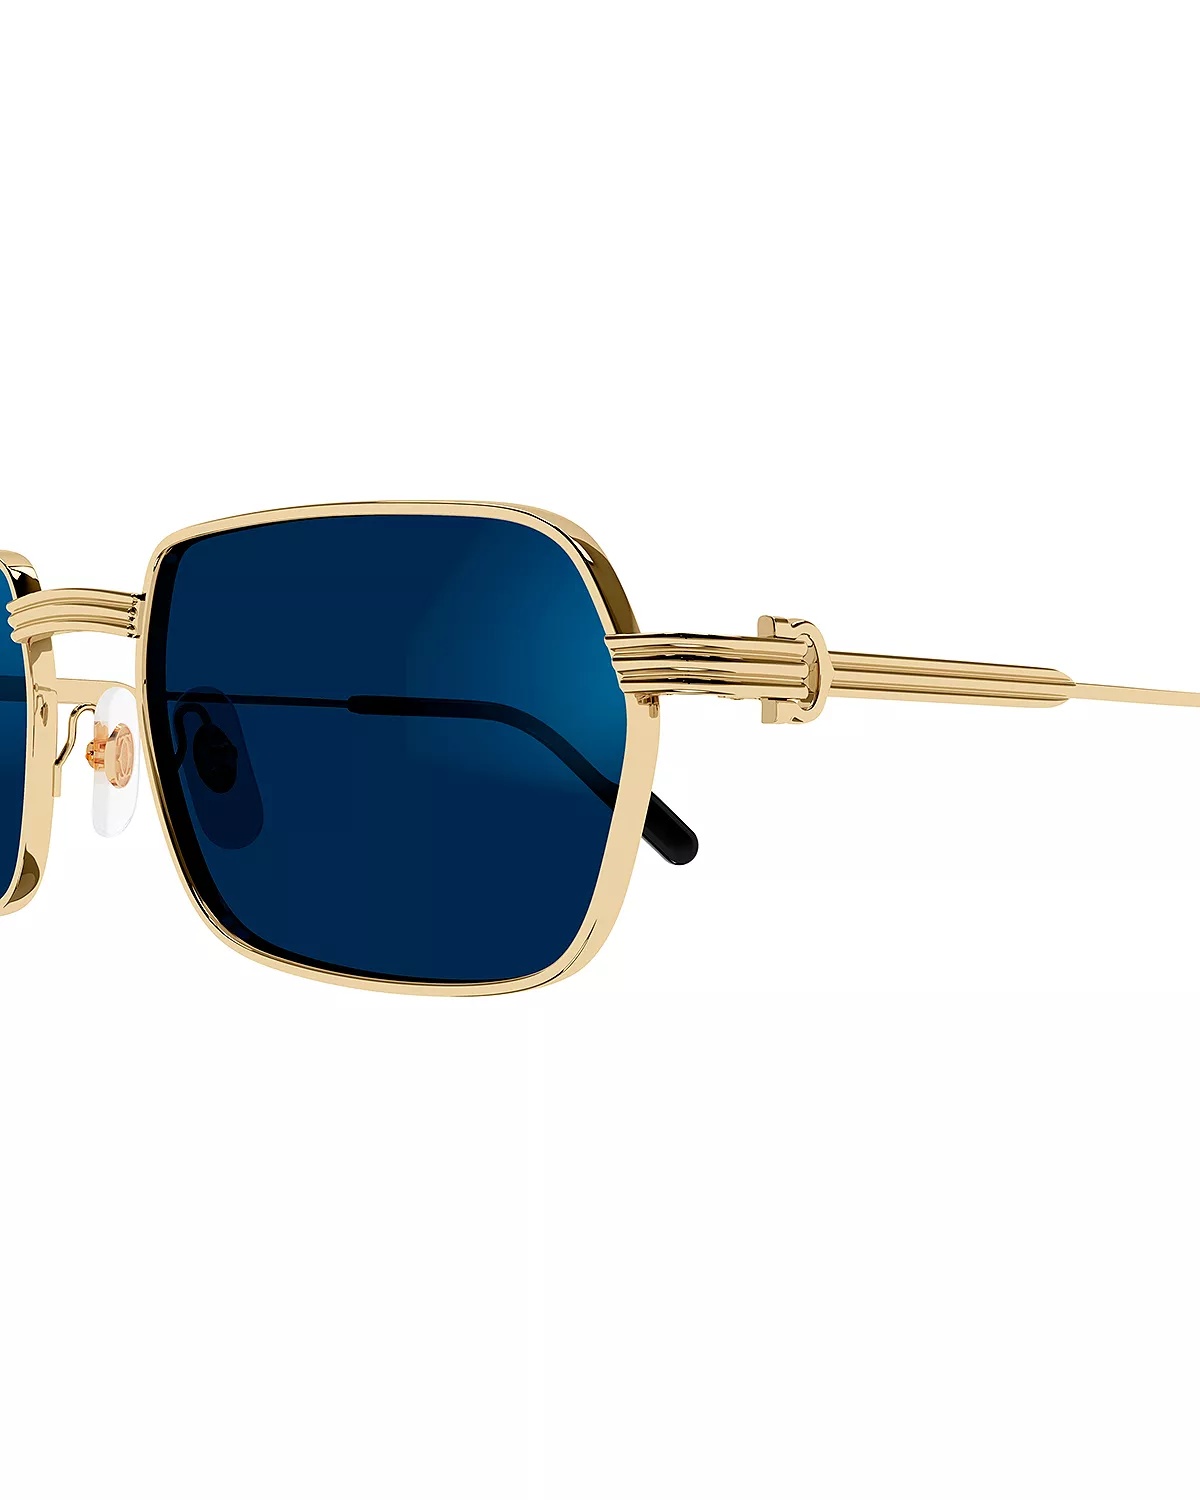 Premiere De Cartier 24 Carat Gold Plated Photochromatic Rectangular Sunglasses, 56mm - 9